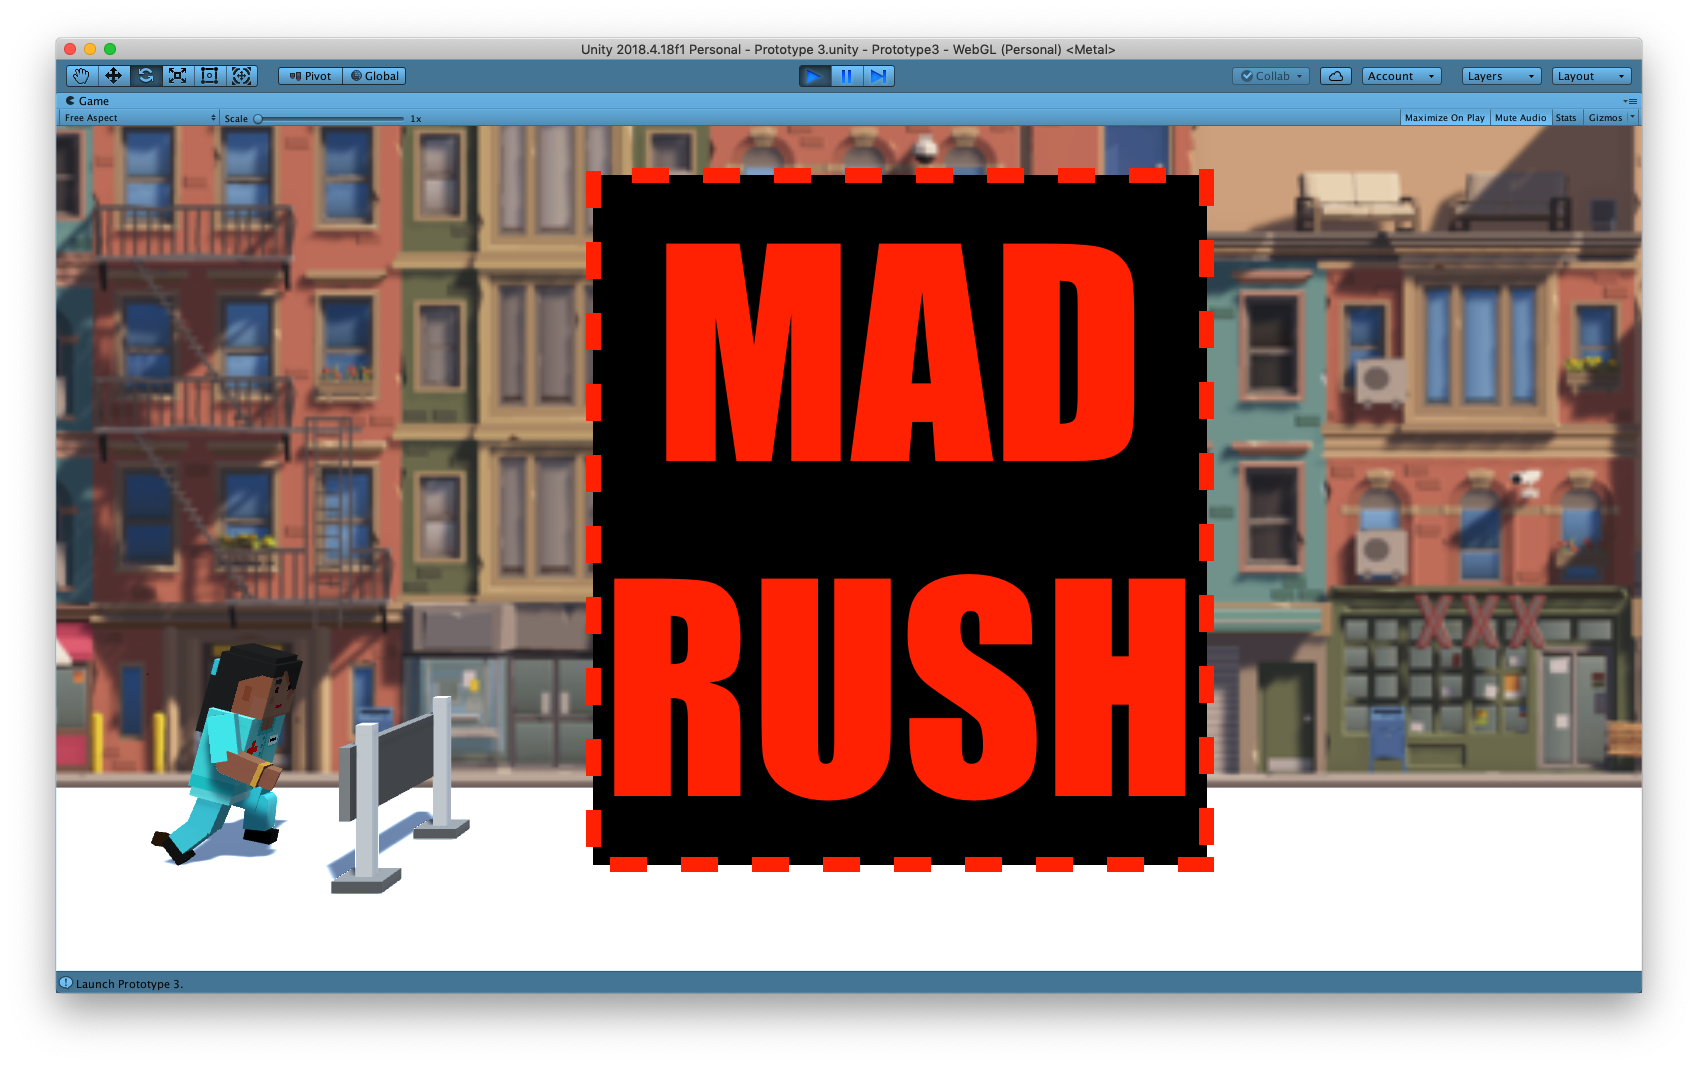 Mad Rush Prototype